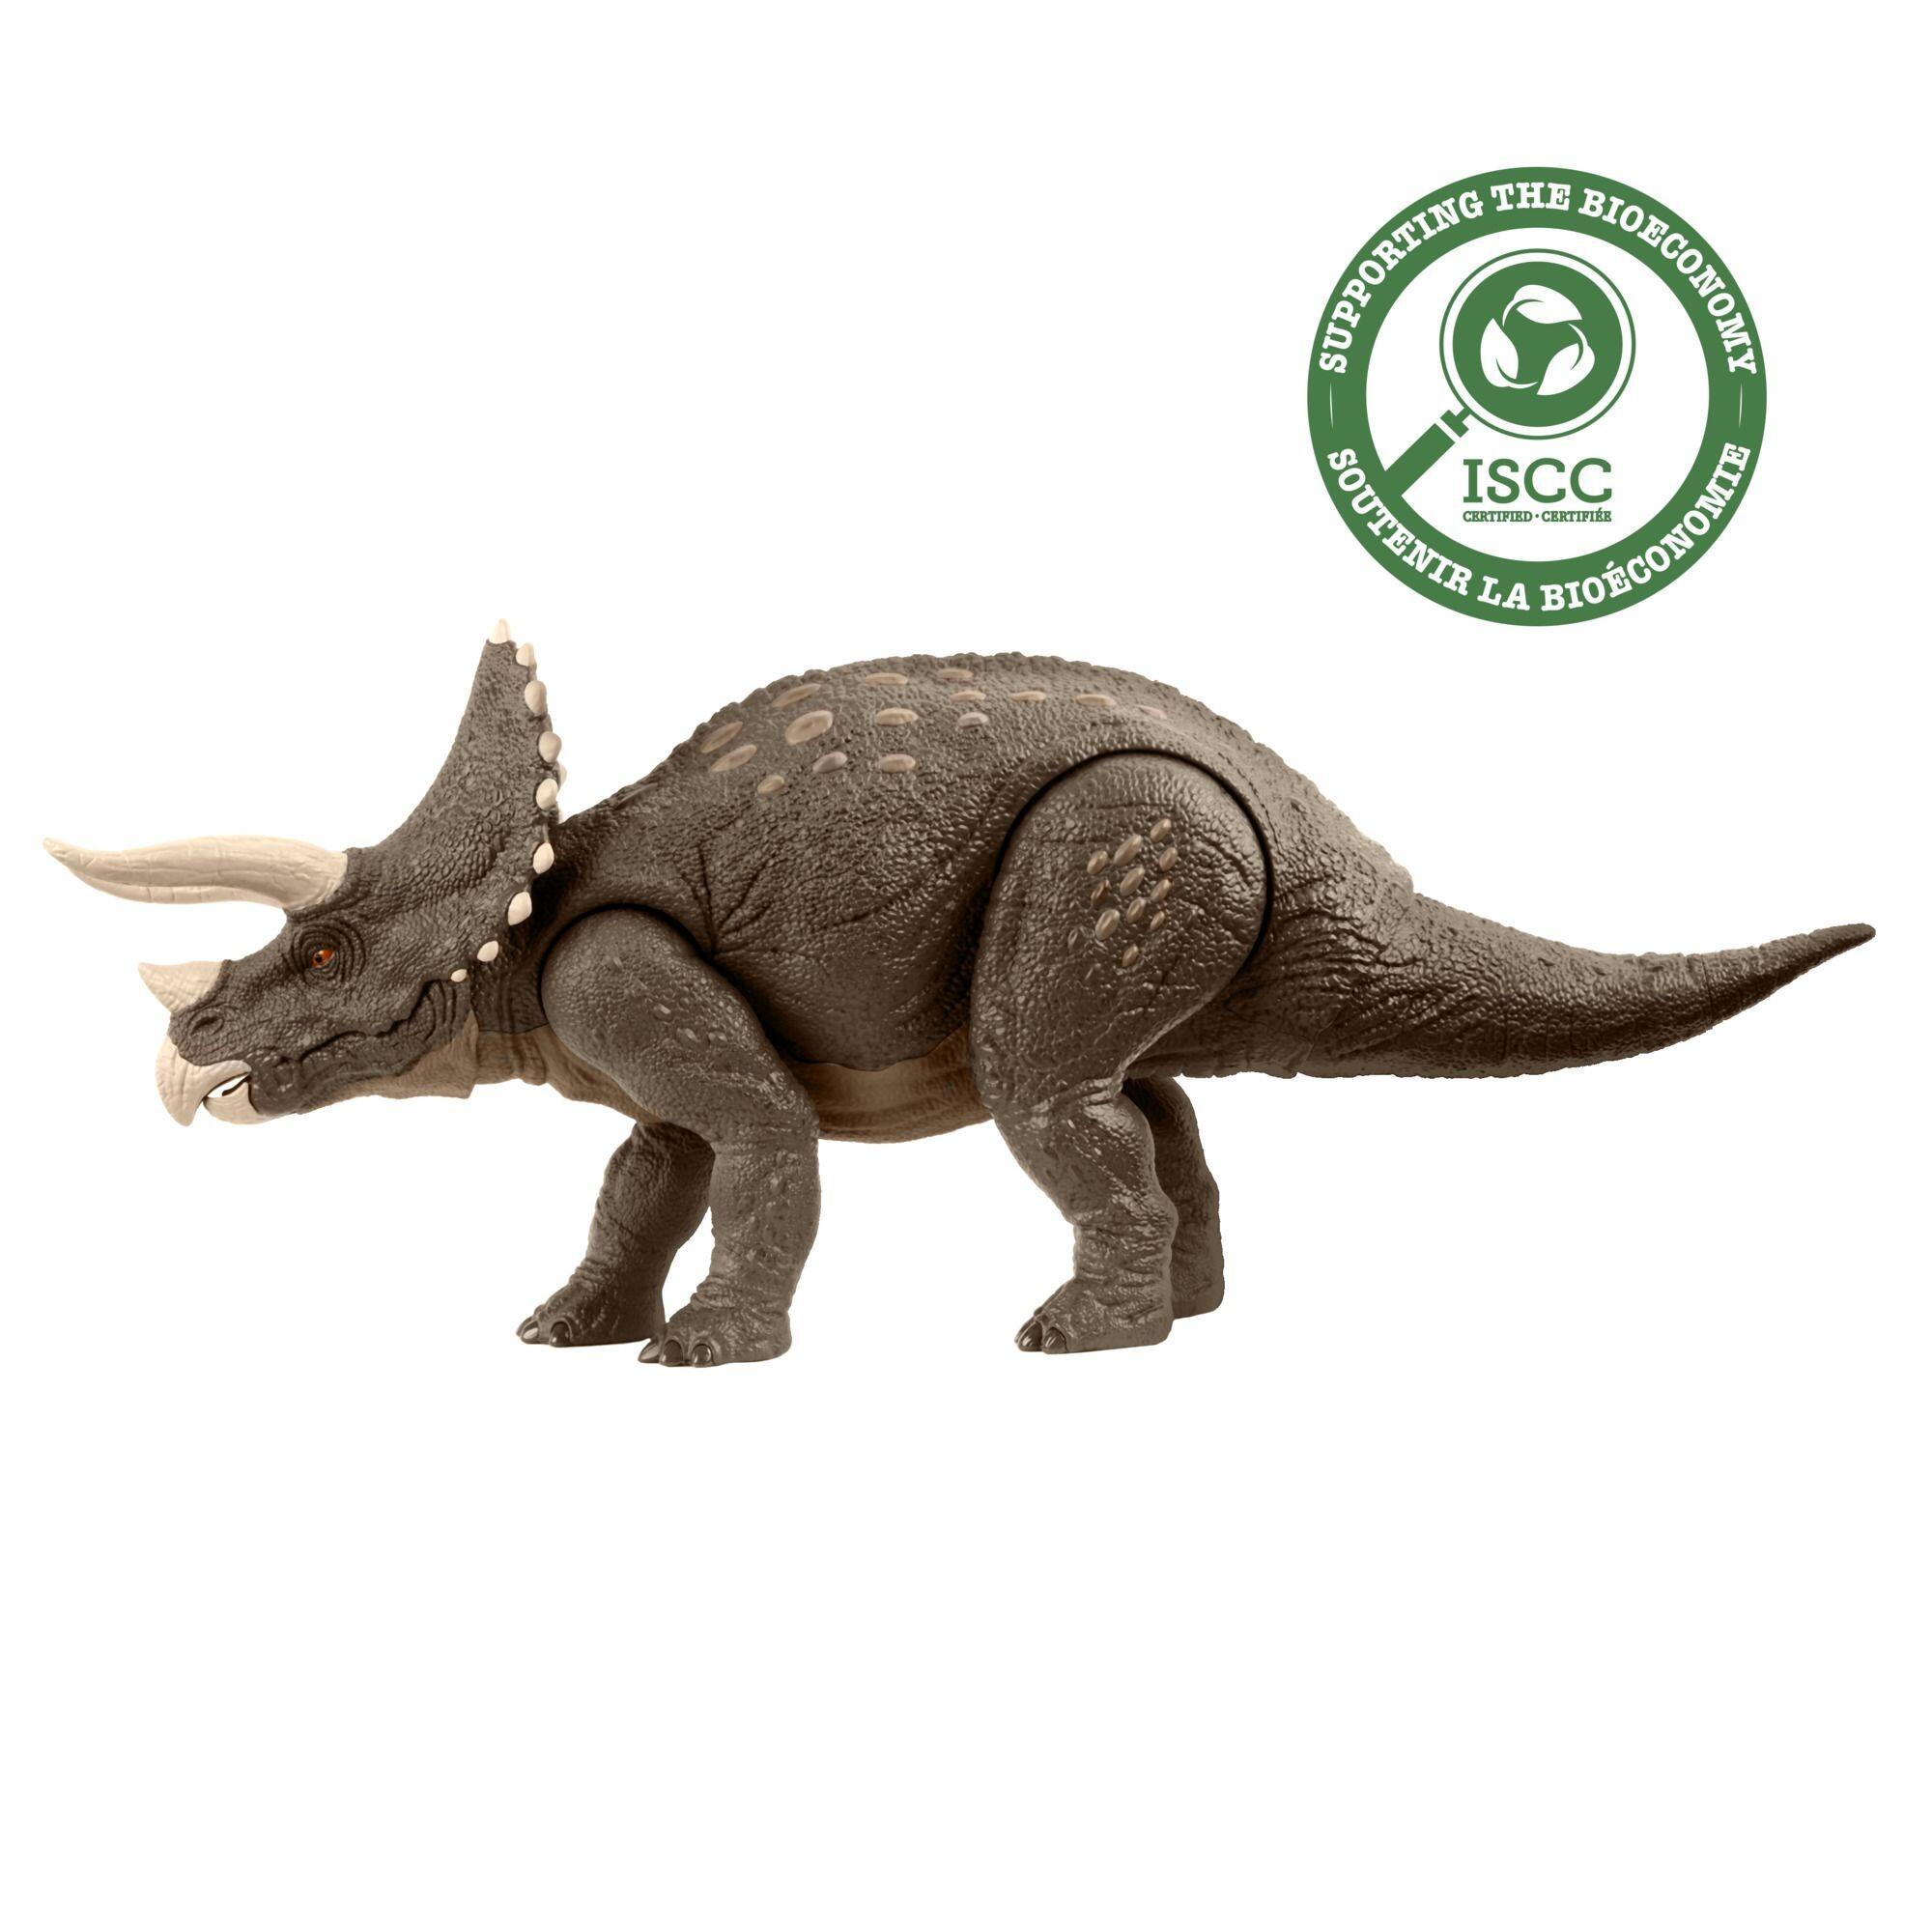 Jurassic World Dino Trackers Habitat Defender Triceratops